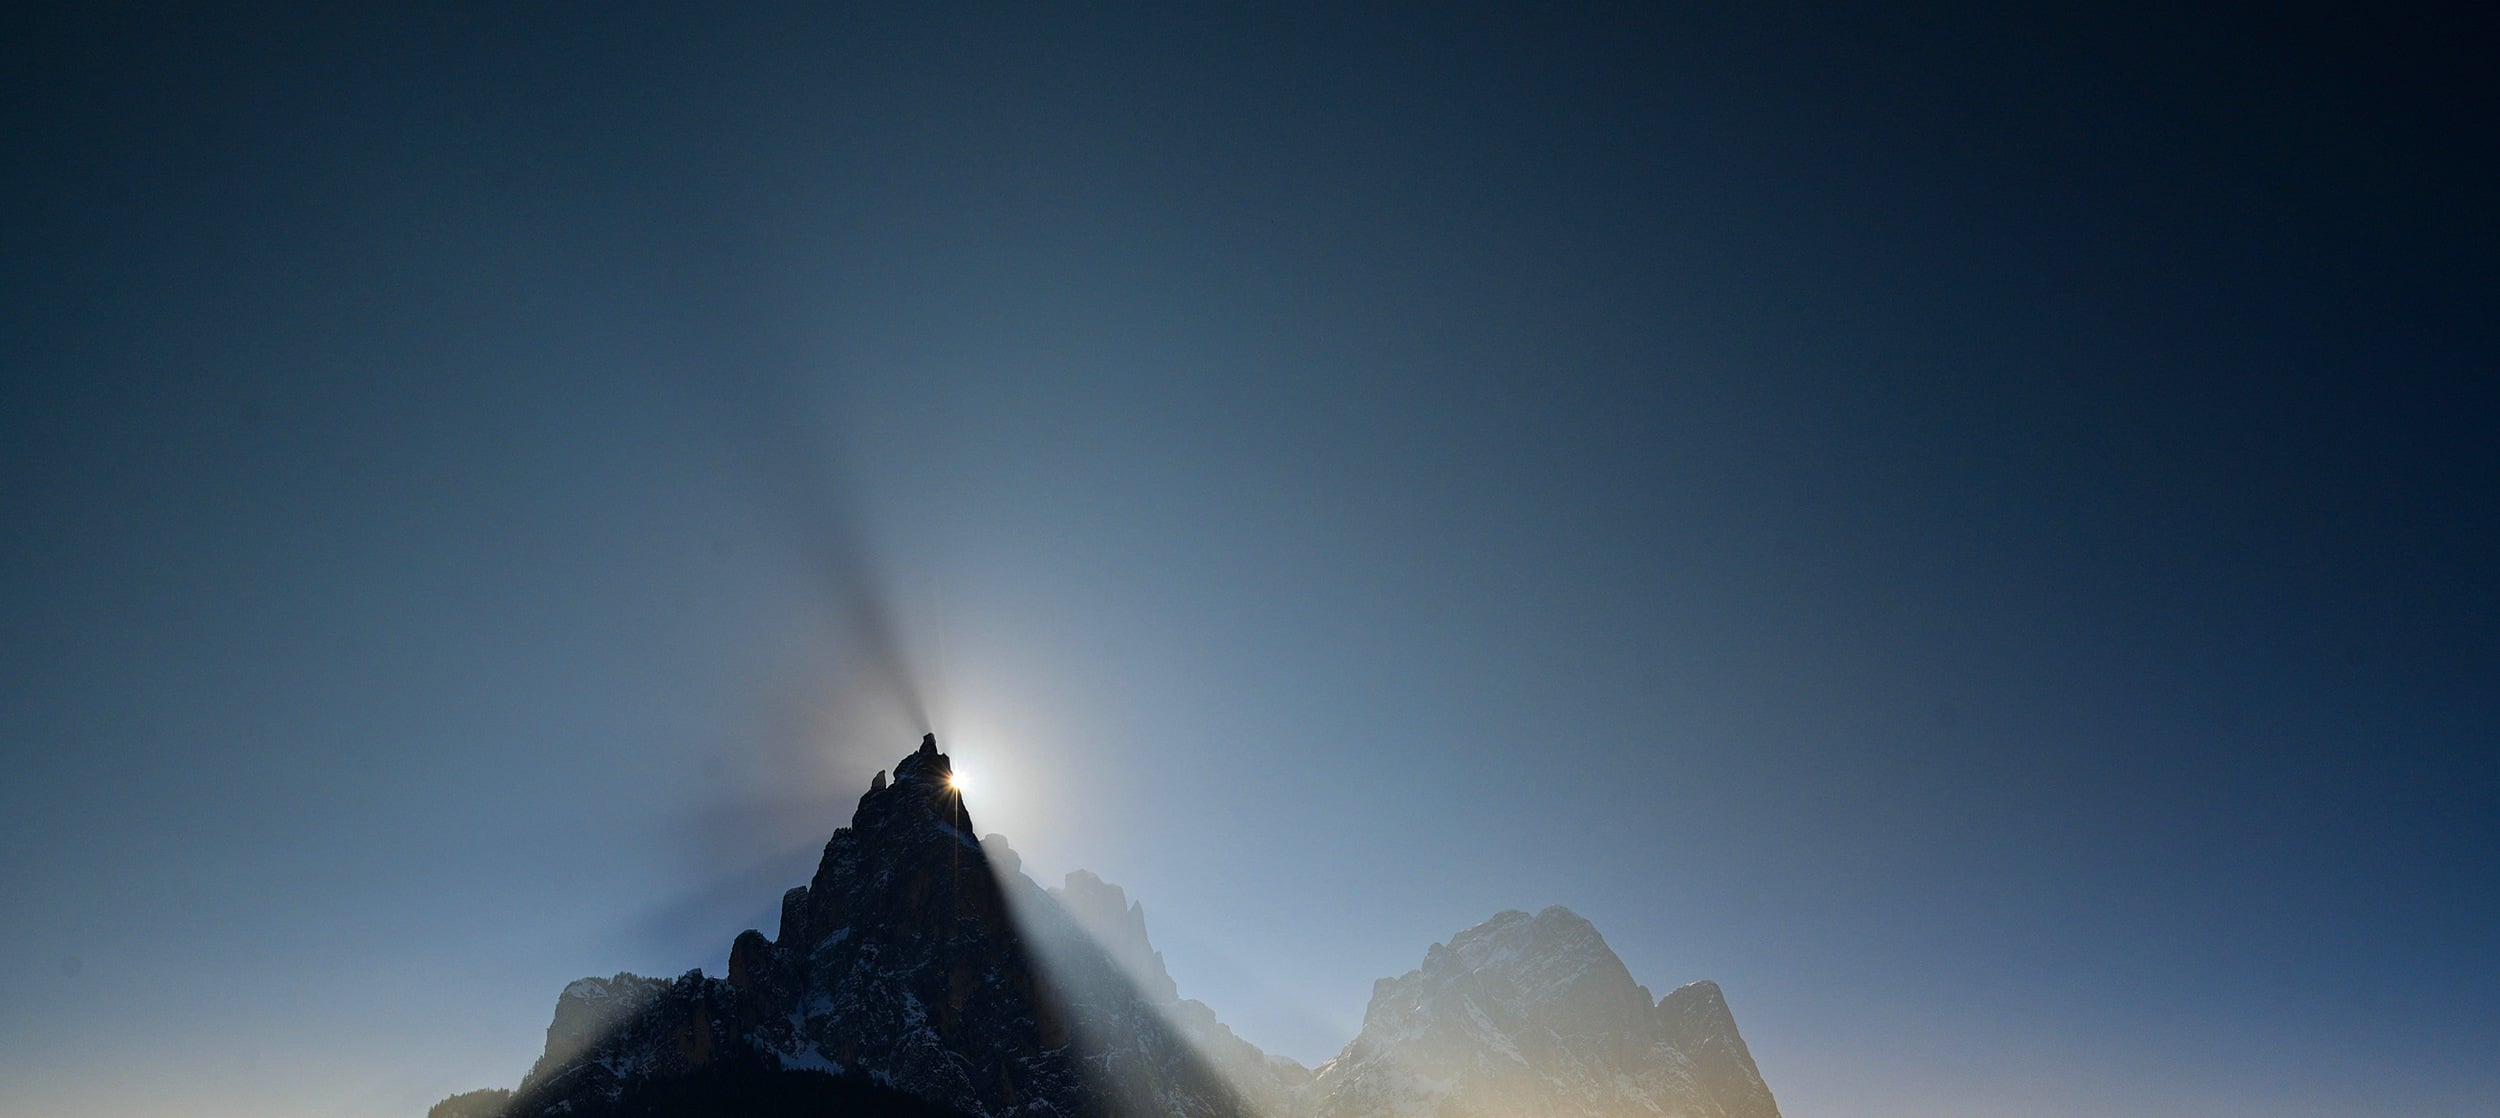 Winter solstice in the Dolomites